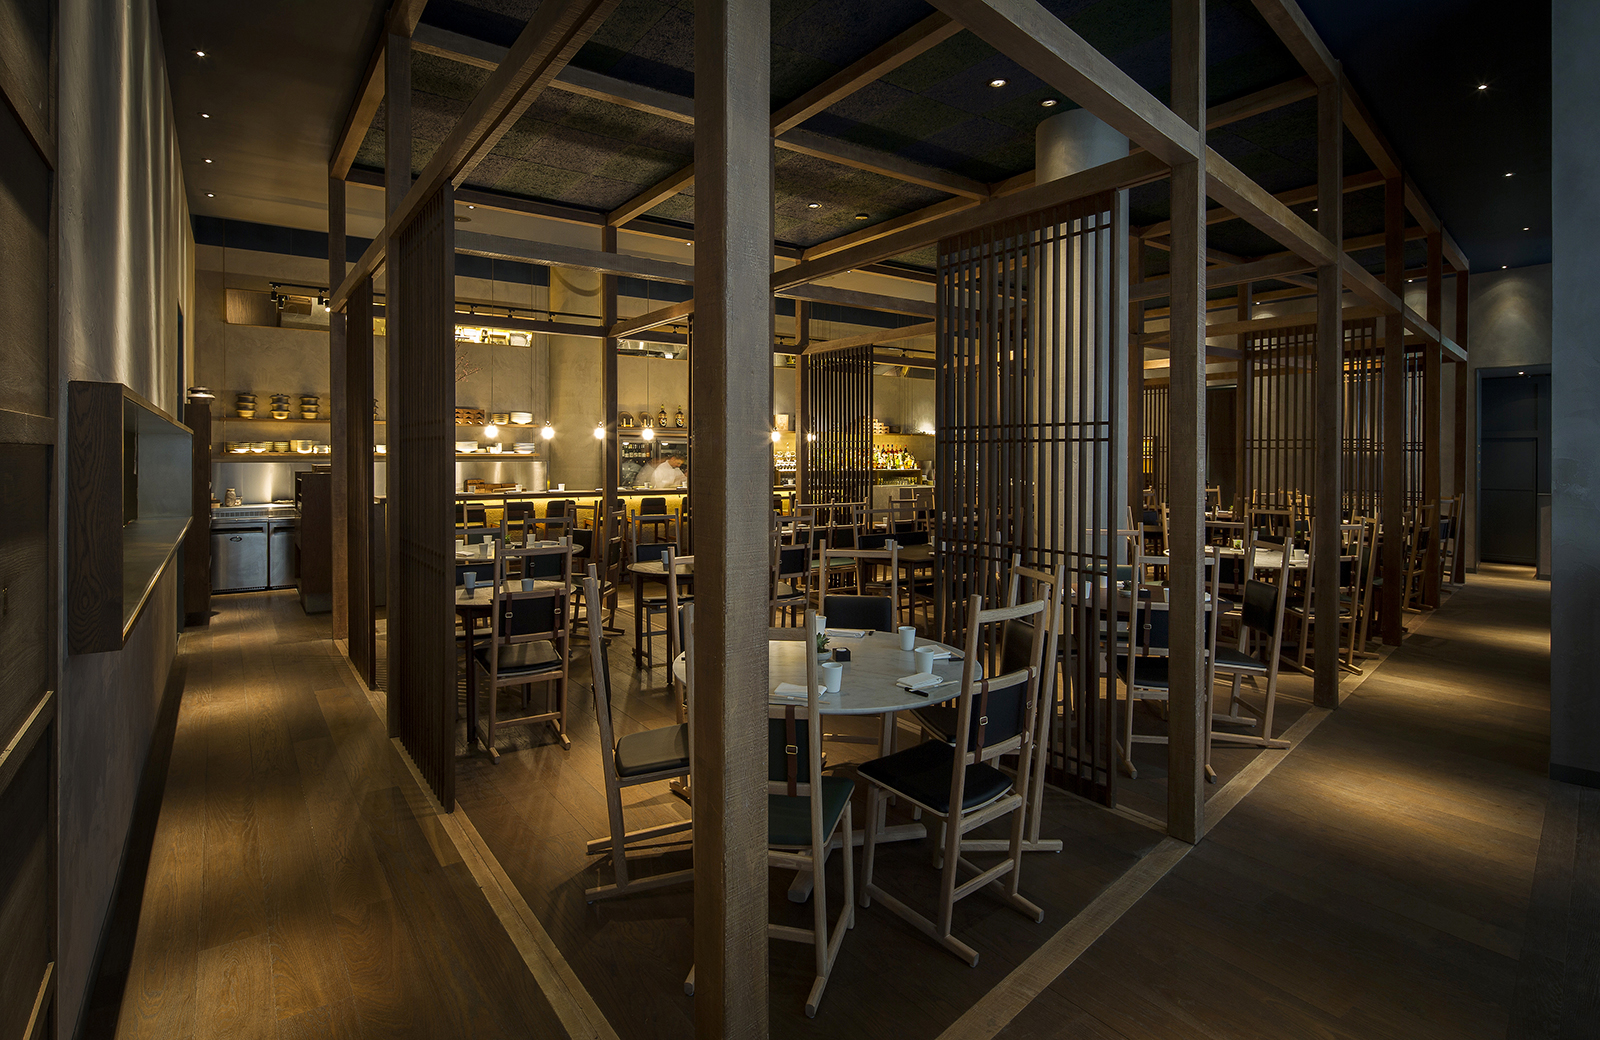 Jason Atherton's Sosharu restaurant designed by Neri & Hu